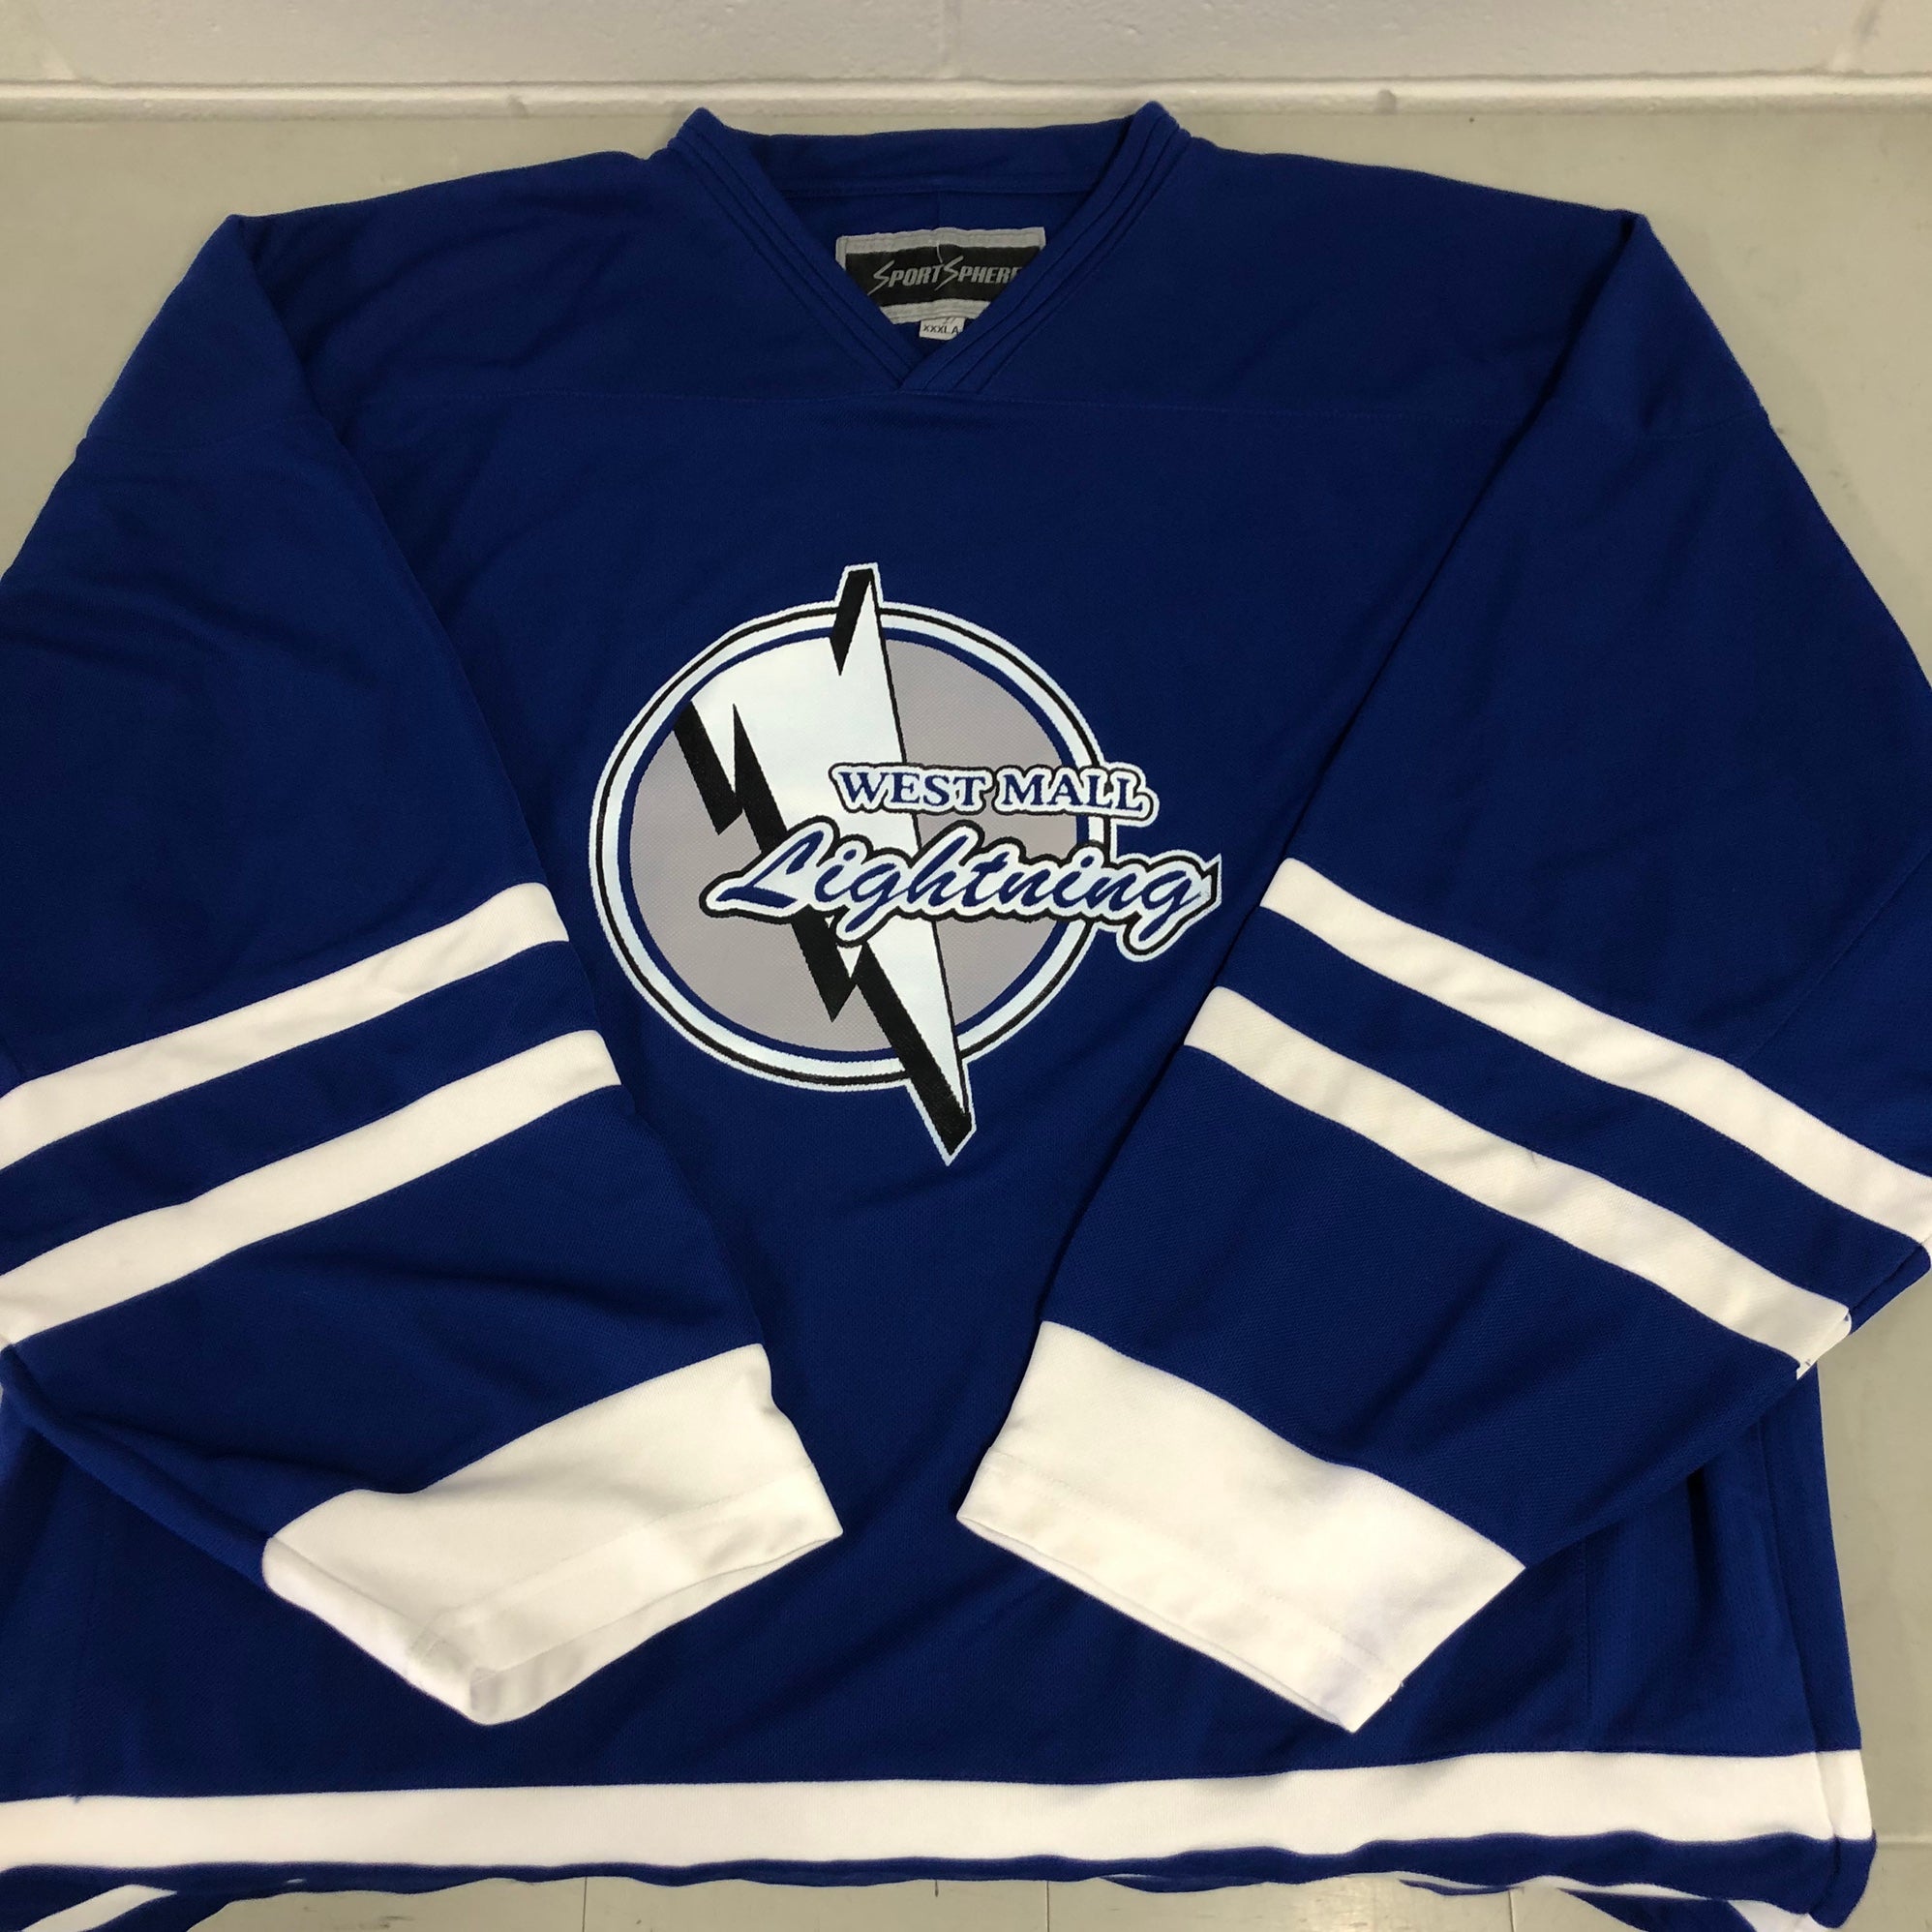 SportSphere West Mall Lightning #10 Hockey Jersey Youth XL Blue Canada Sewn